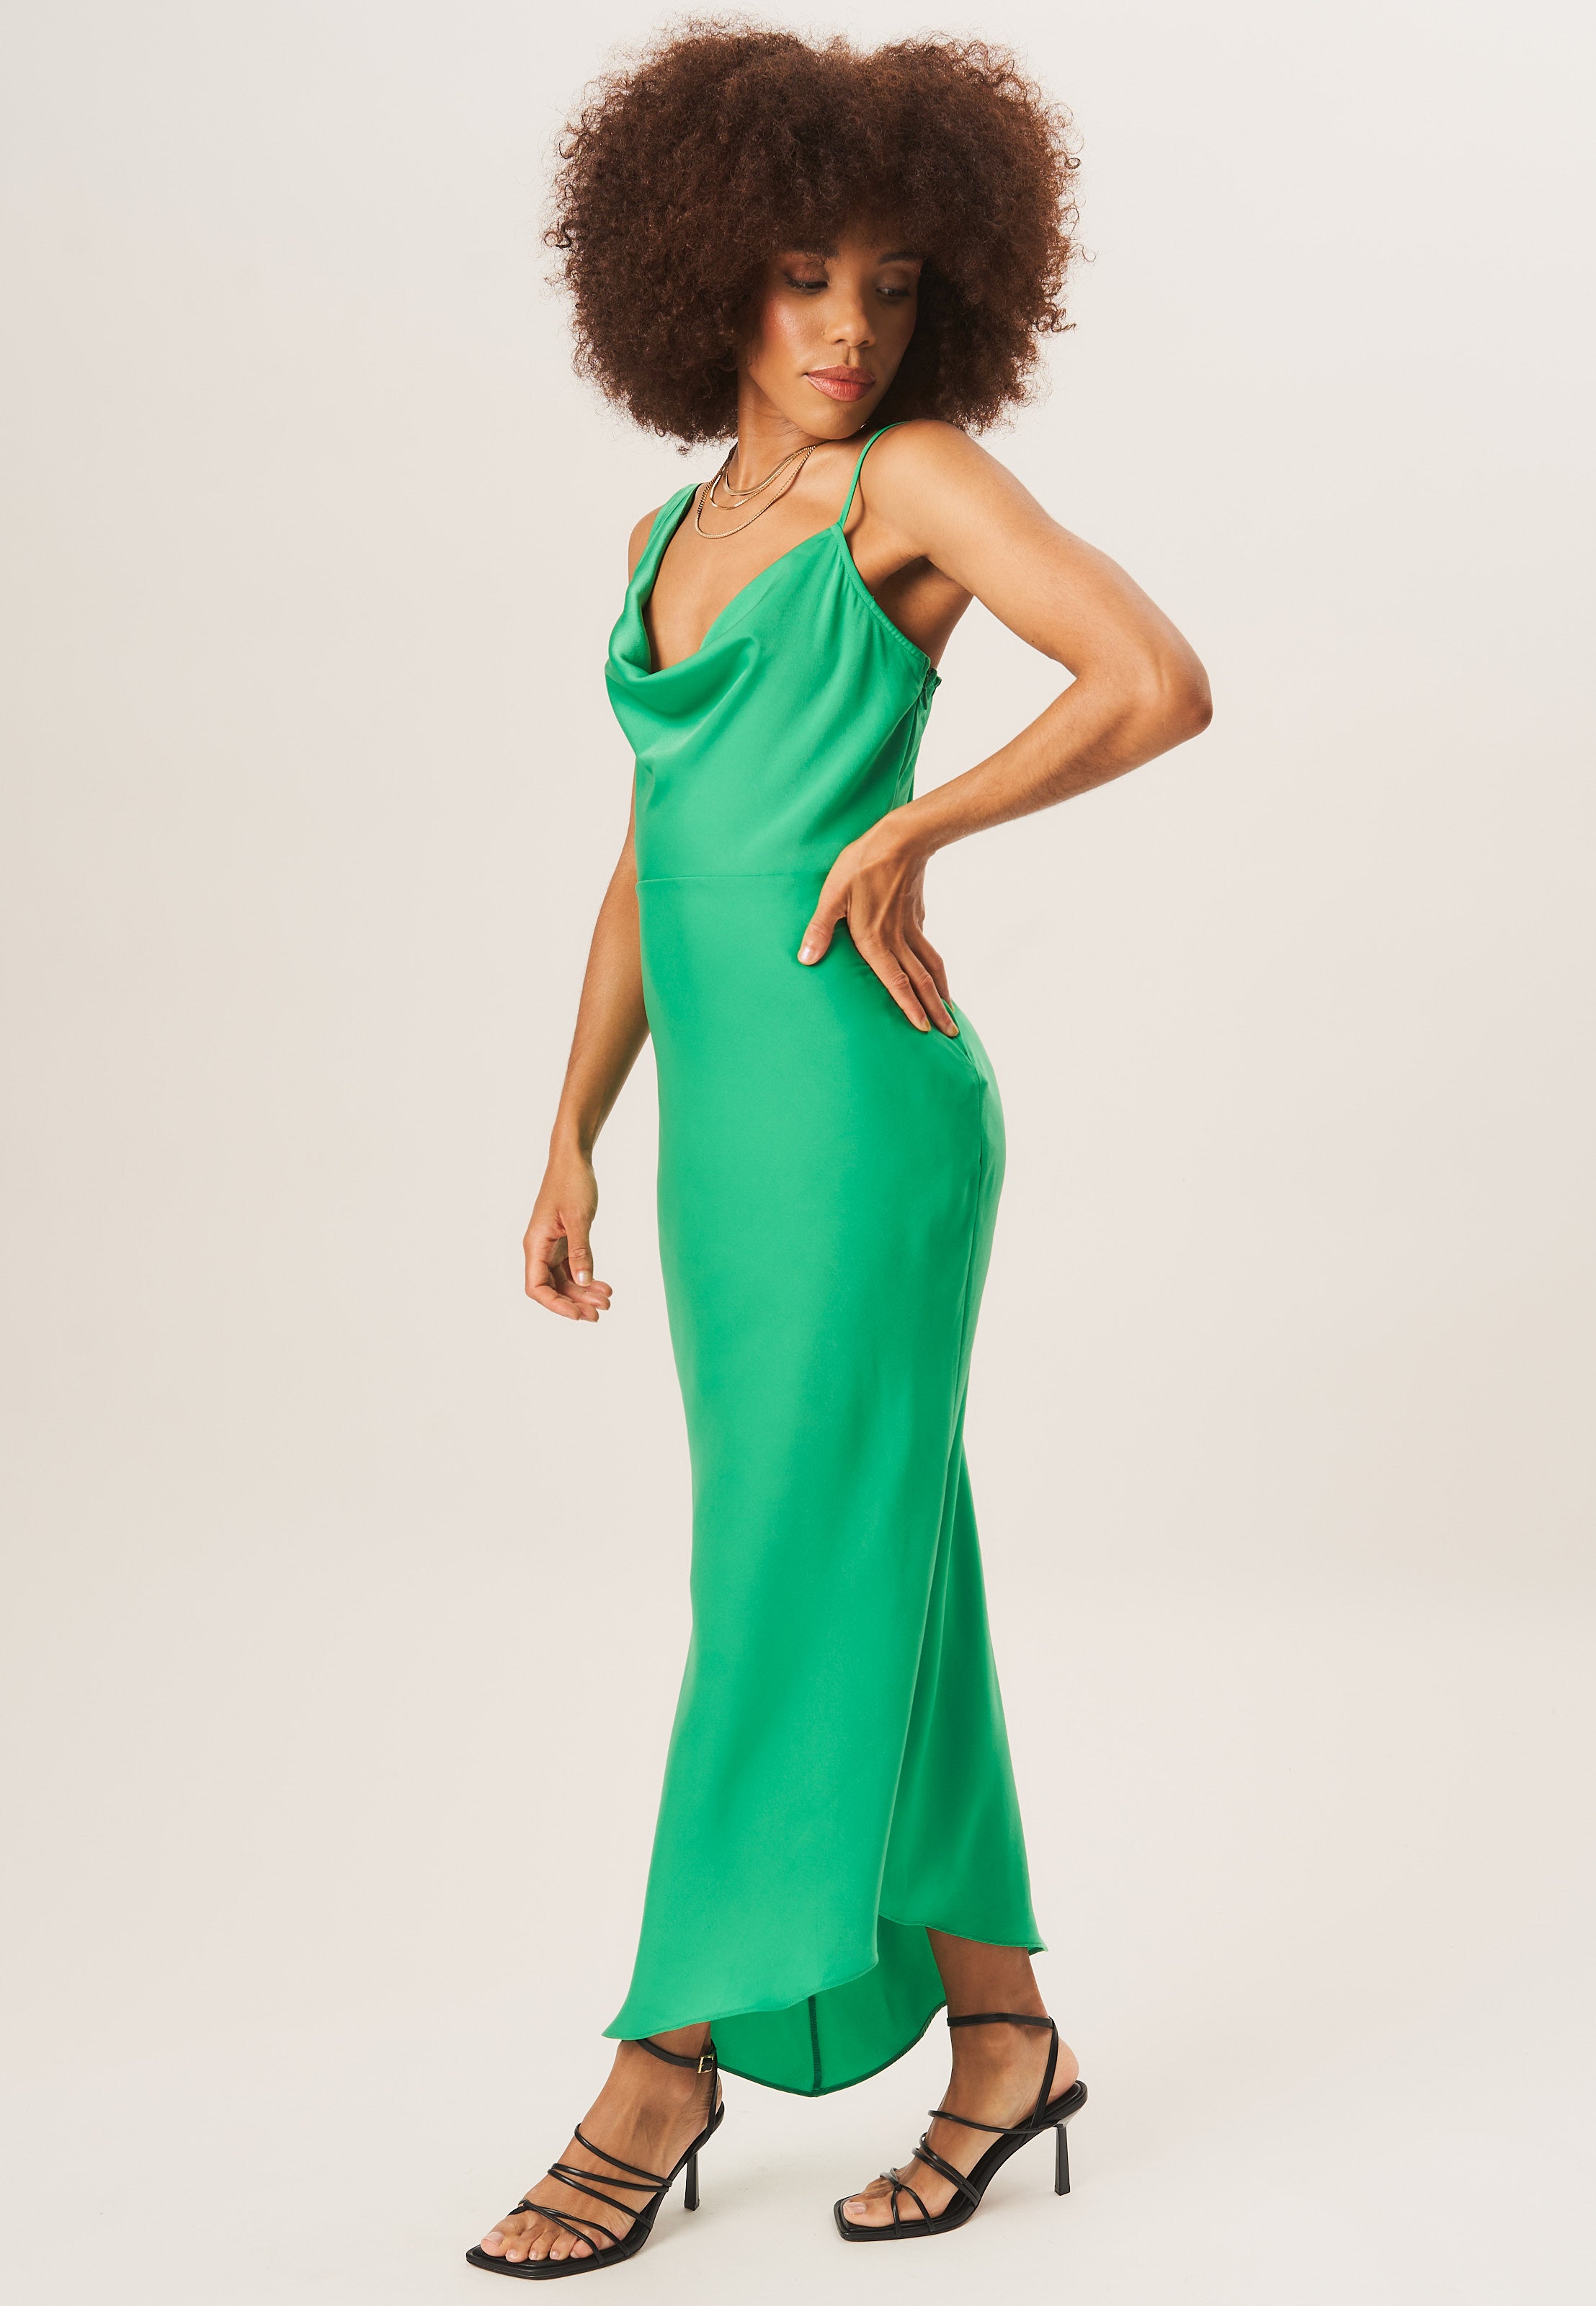 Green Cowl Neck Asymmetric Hem Midi Dress